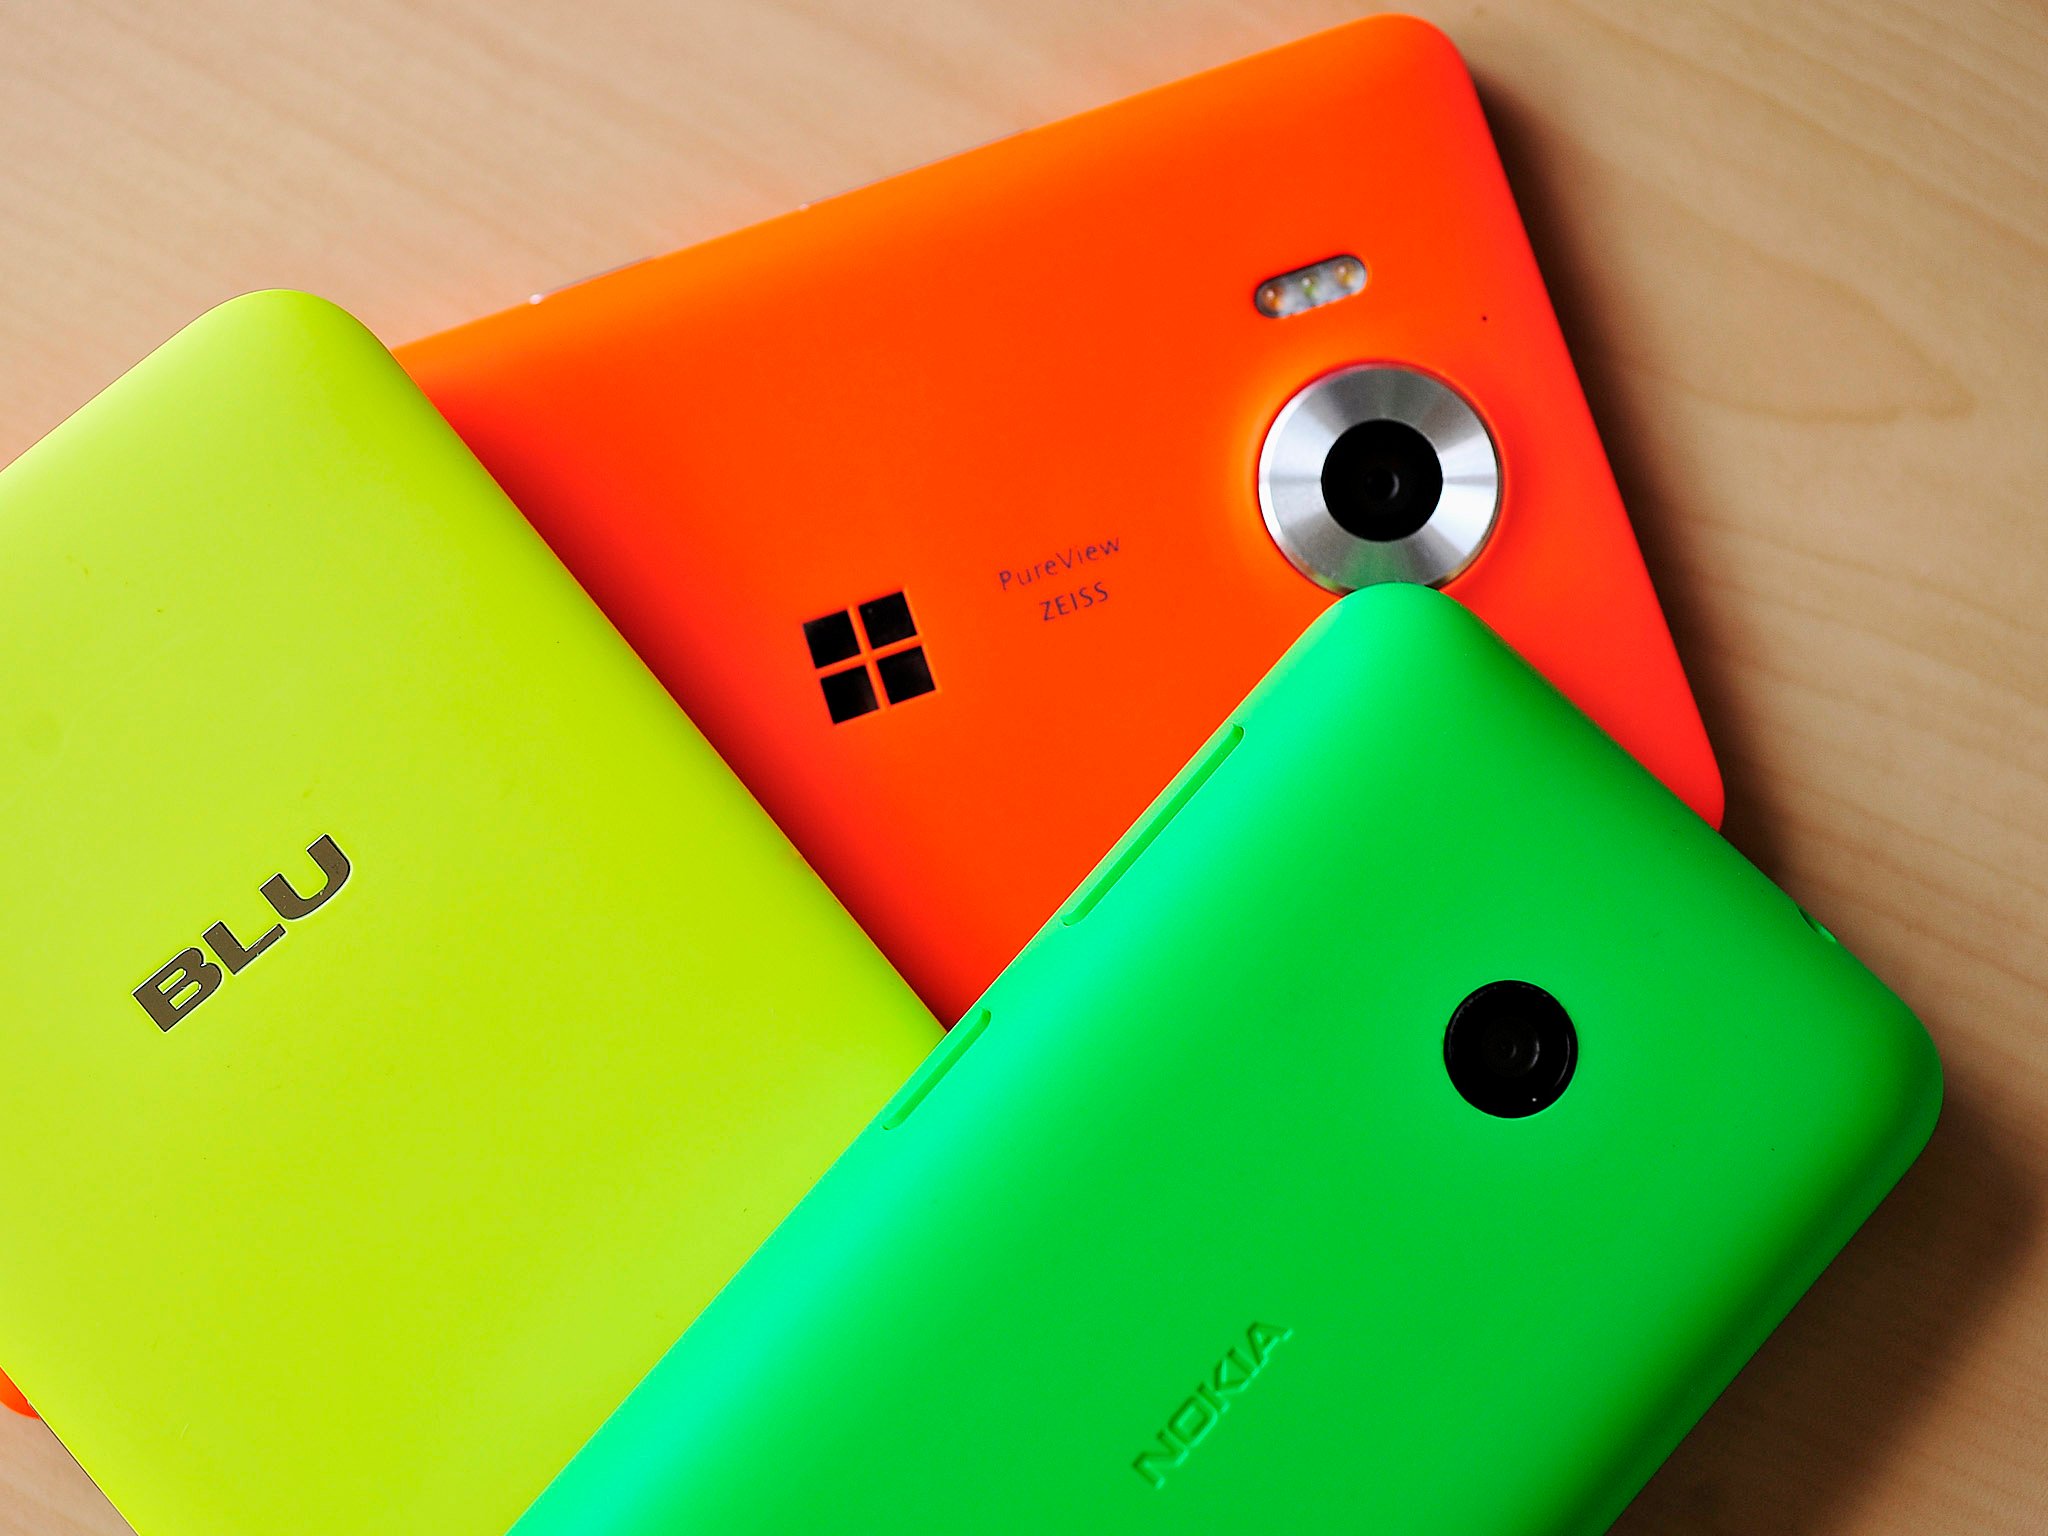 the-nokia-lumia-520-is-still-the-most-popular-windows-phone